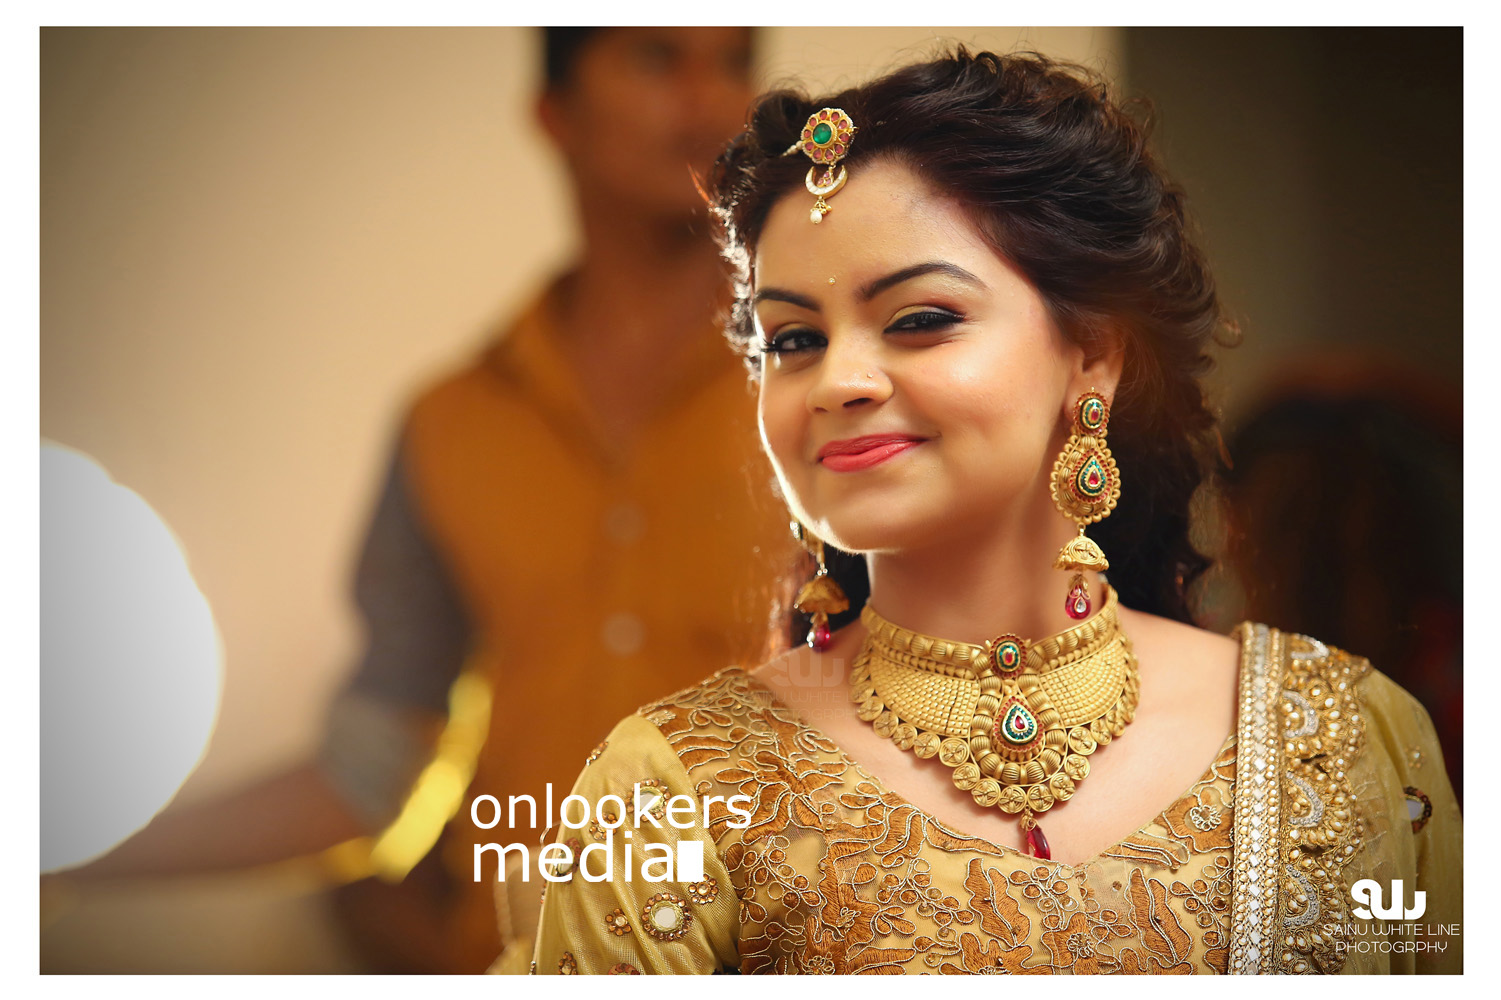 https://onlookersmedia.in/wp-content/uploads/2015/12/Shilpa-Bala-Wedding-Engagement-Stills-Photos-5.jpg